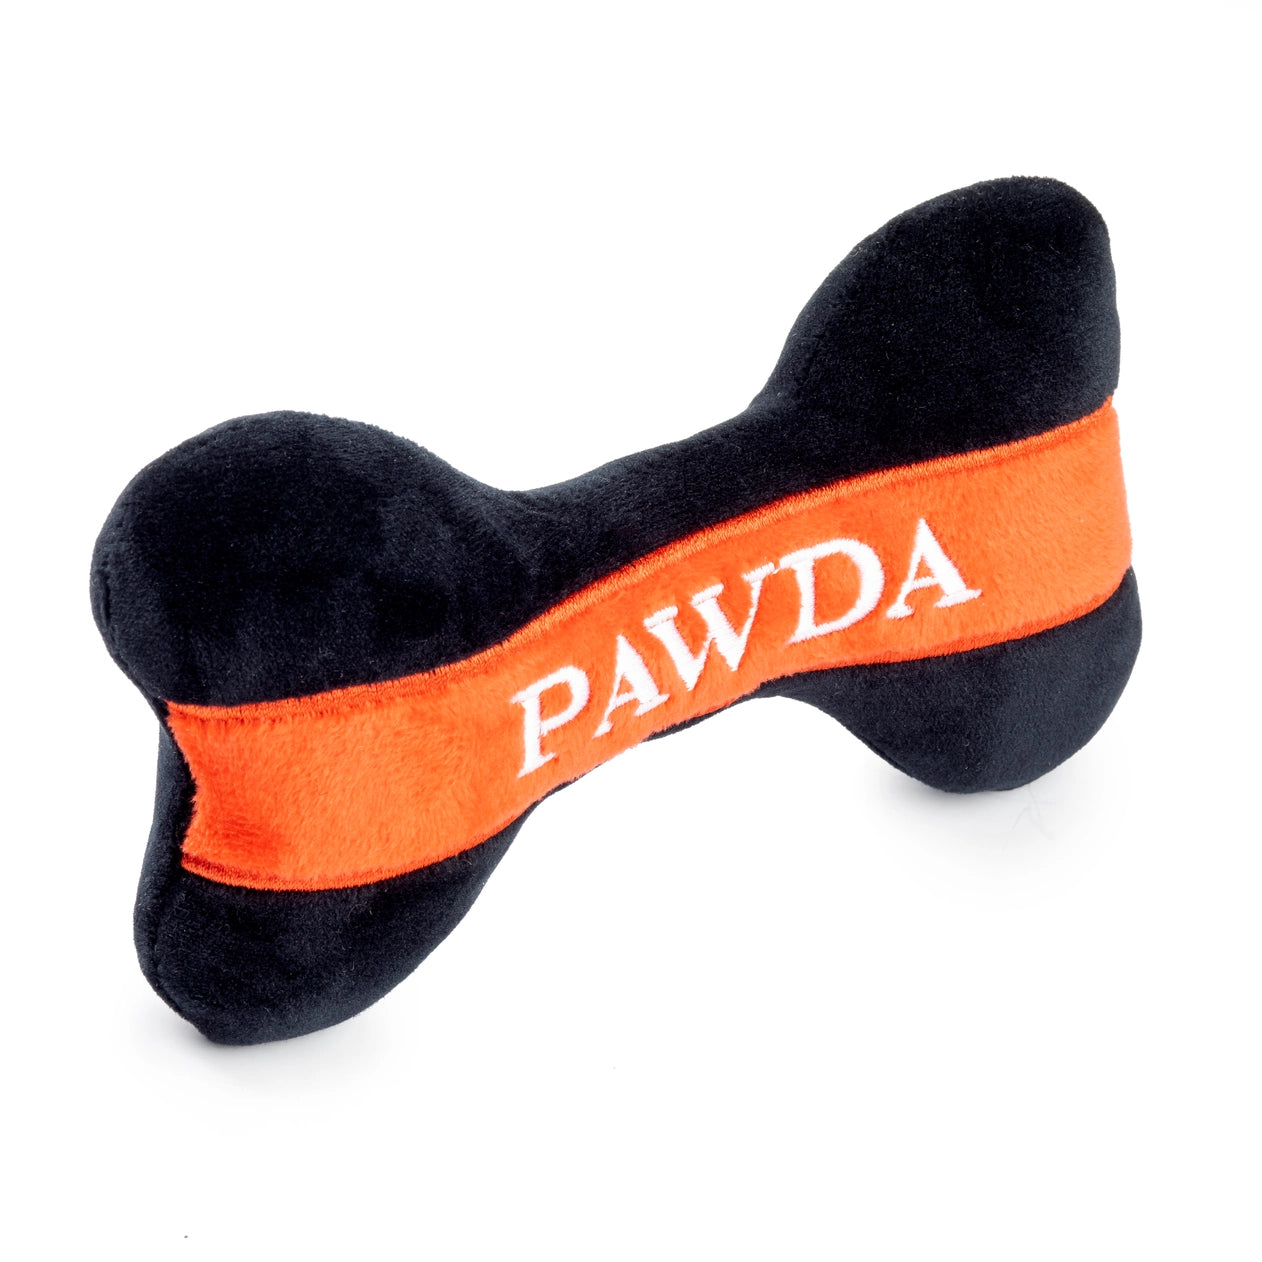 Haute Diggity Dog Pawda Bone Squeaker Dog Toy